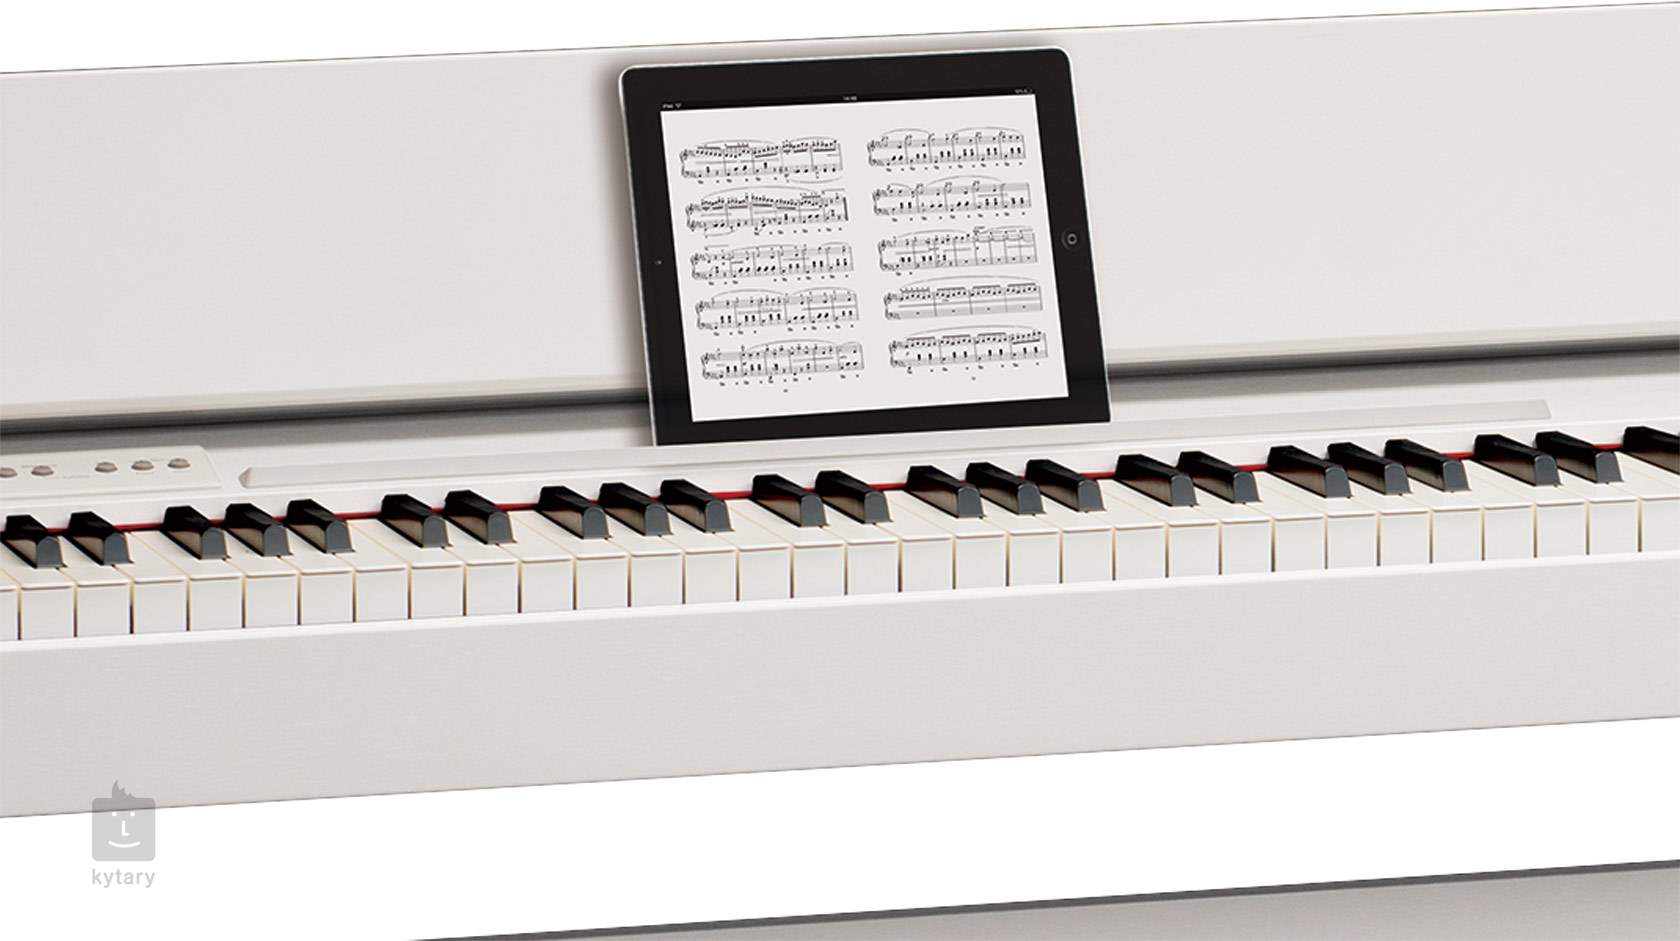 Roland F140R Digital Piano Review and Demo